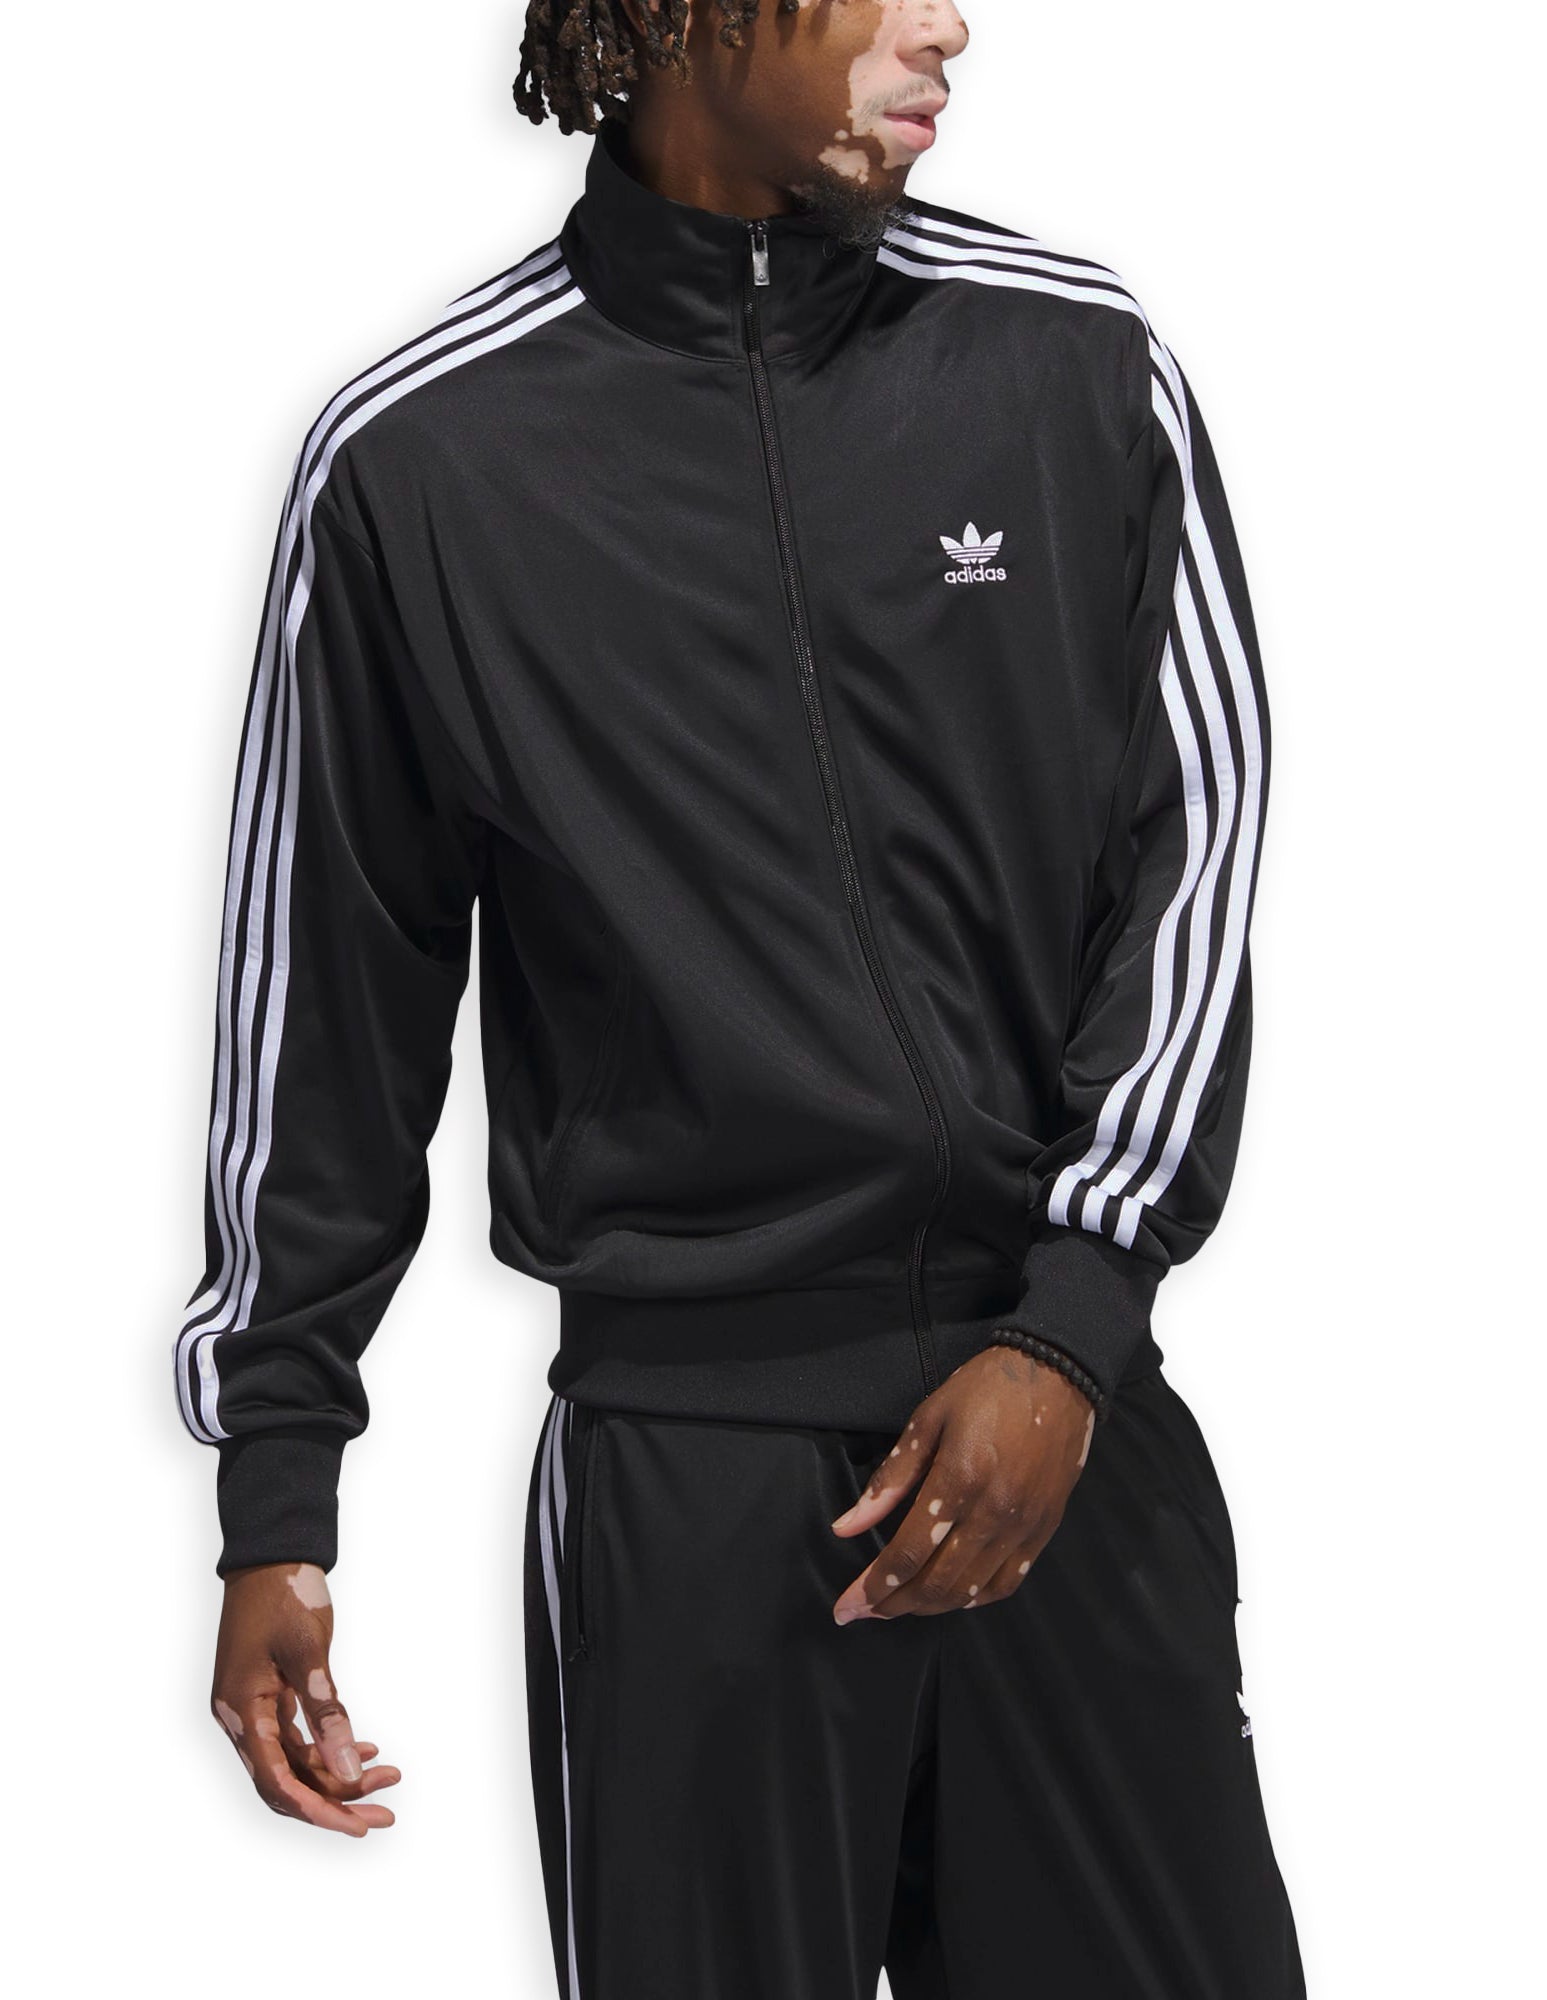 Adidas Fbird Tt Black White Men's Zip Sweatshirt